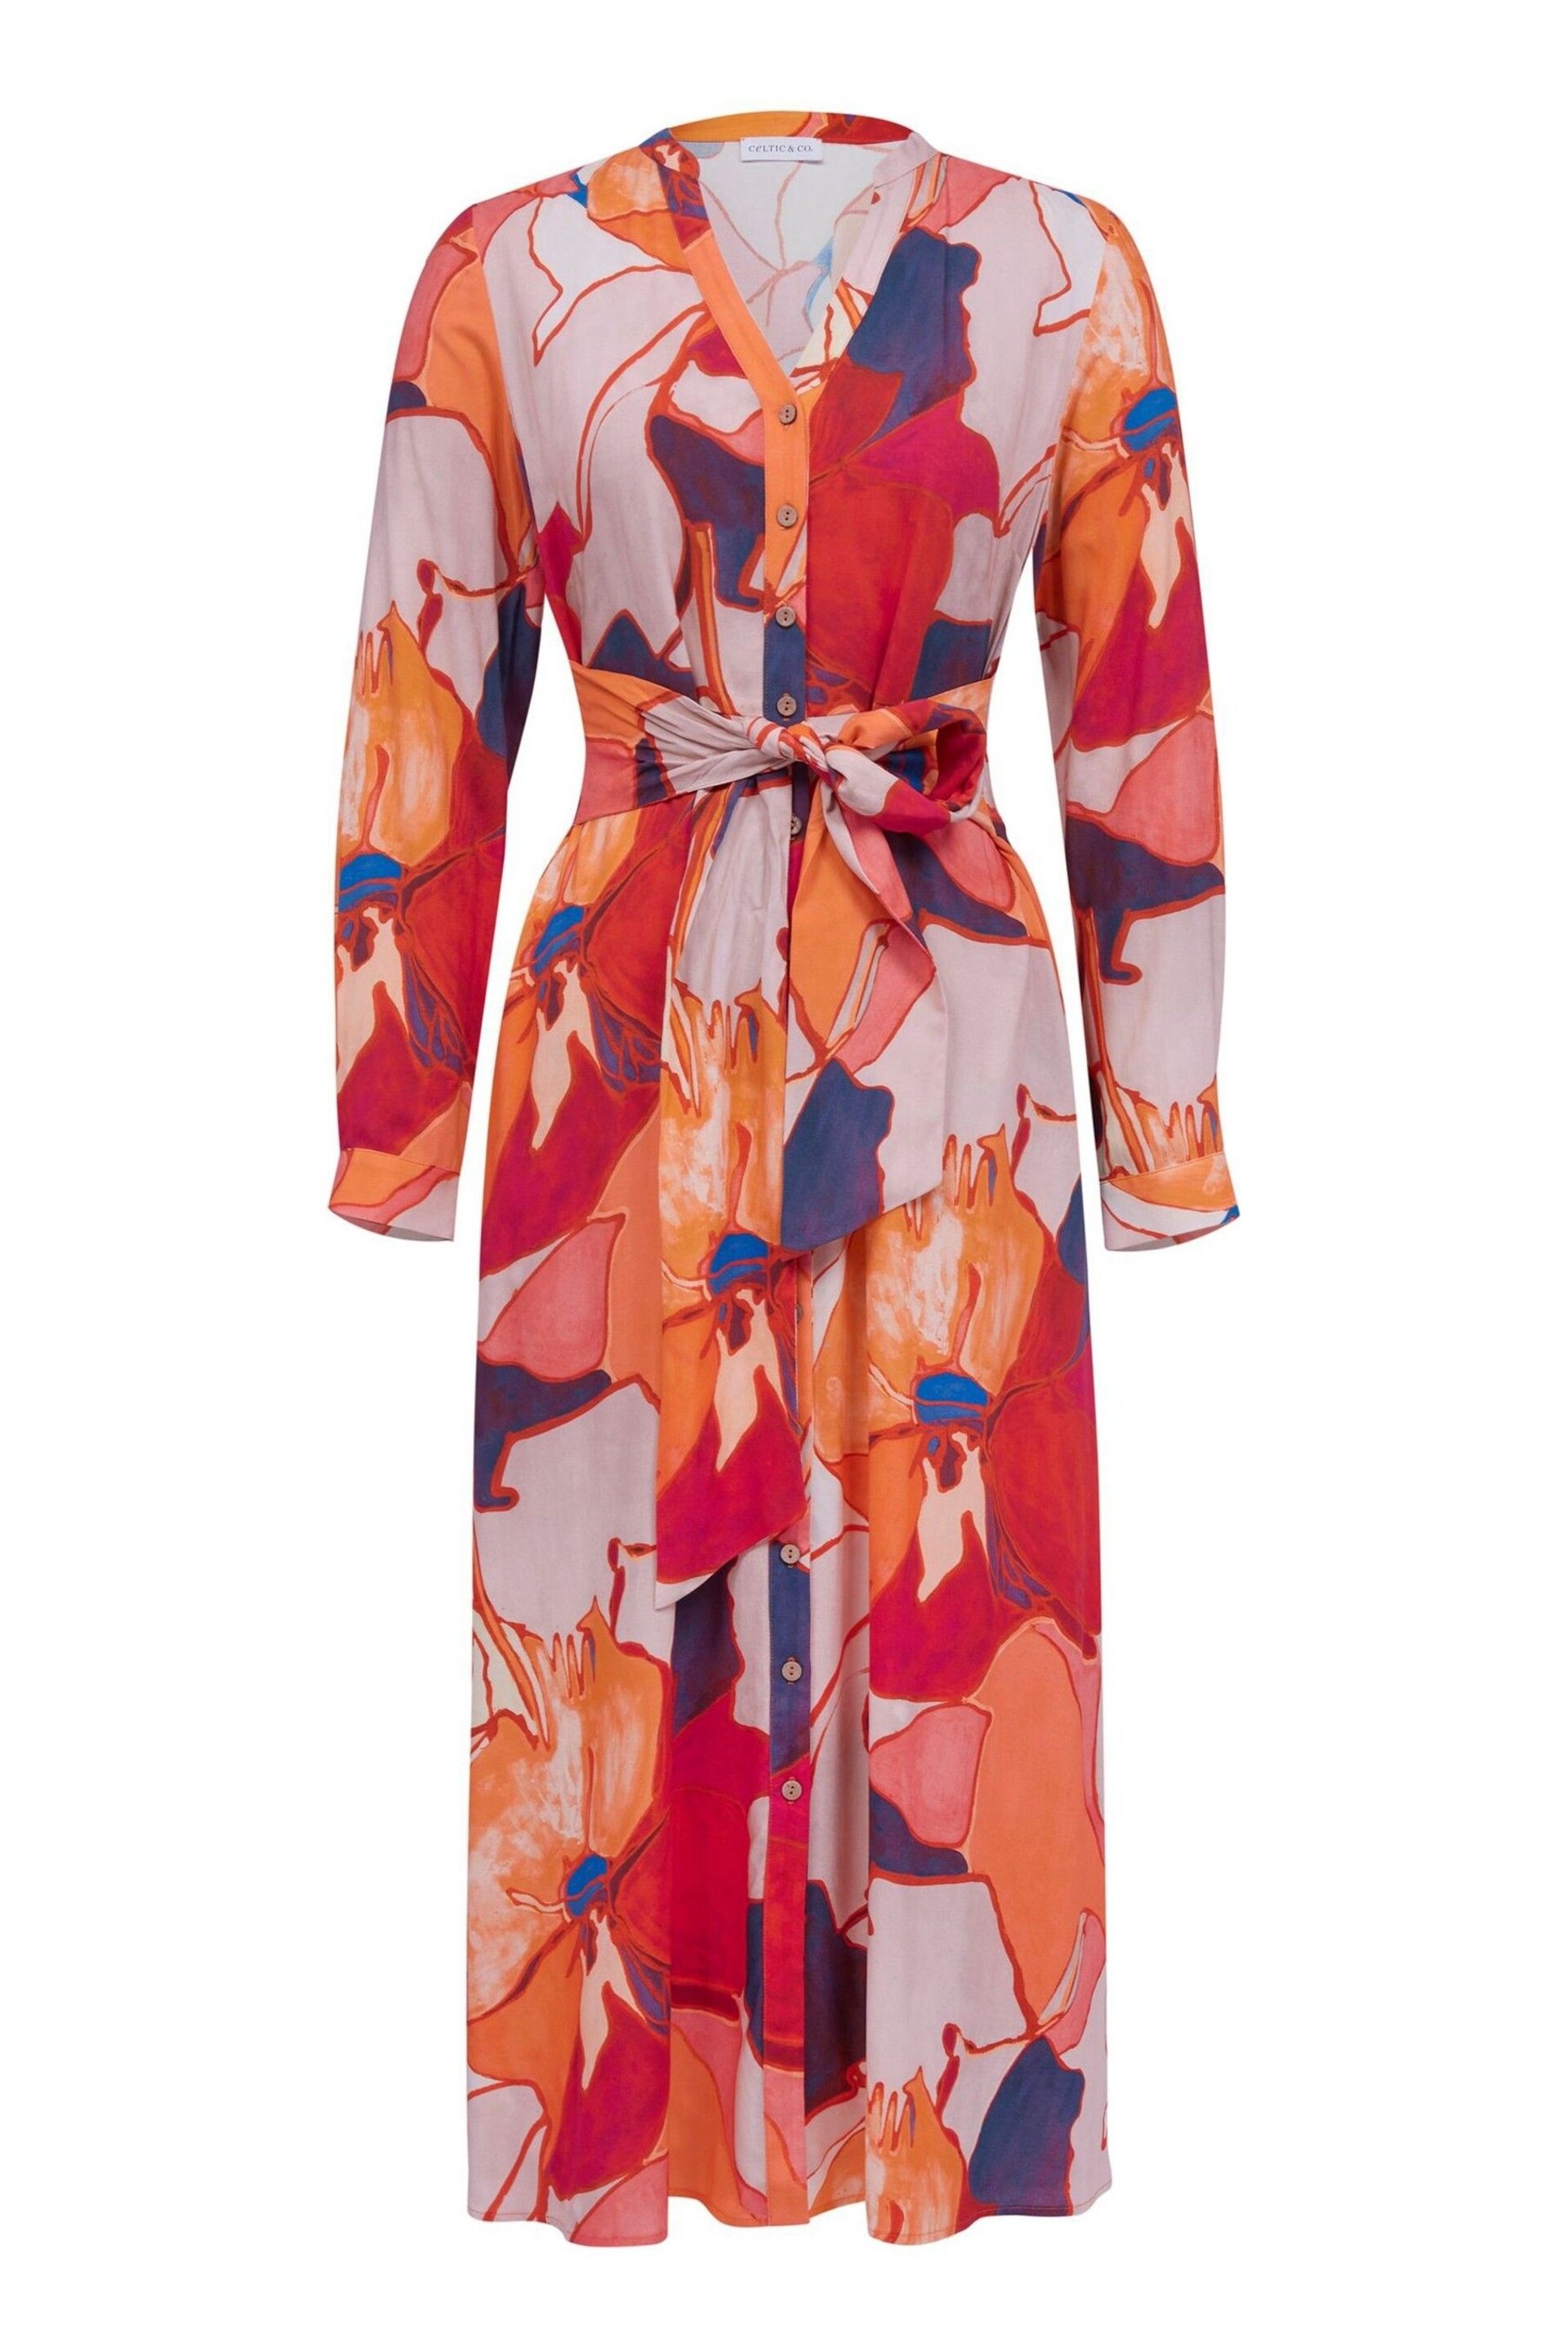 Celtic & Co. Orange Tie Front Midi Dress - Image 4 of 8